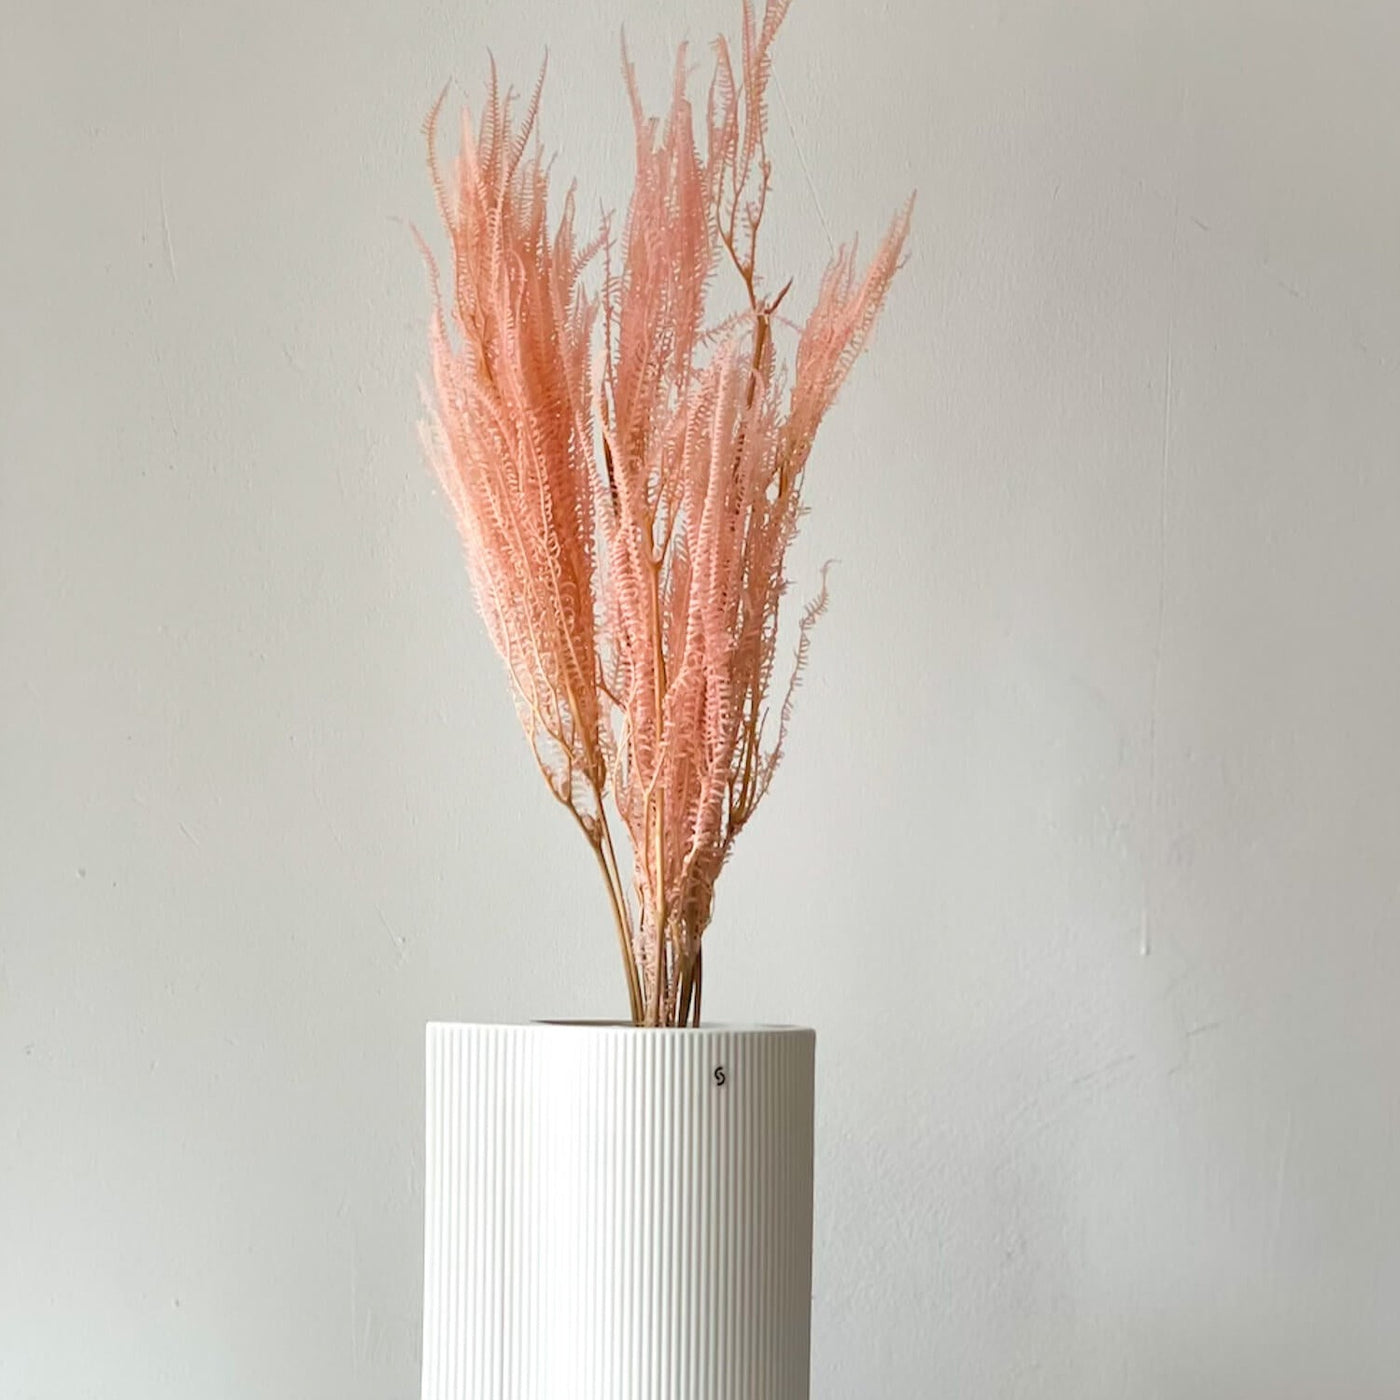 Konservierter Farn konserviert I 70 cm | weiss | rosa | pink - Größe: 6-7 Stiele - Farbe: pink